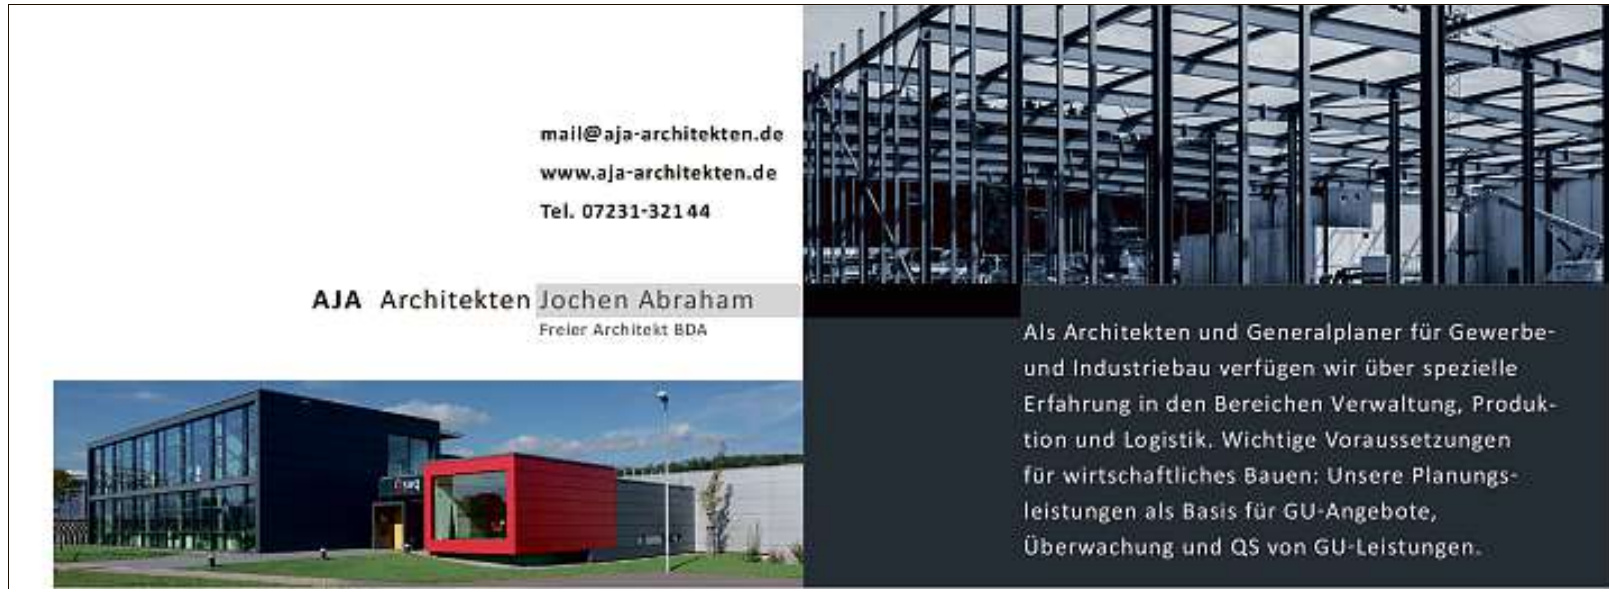 AJA Architekten Jochen Abraham